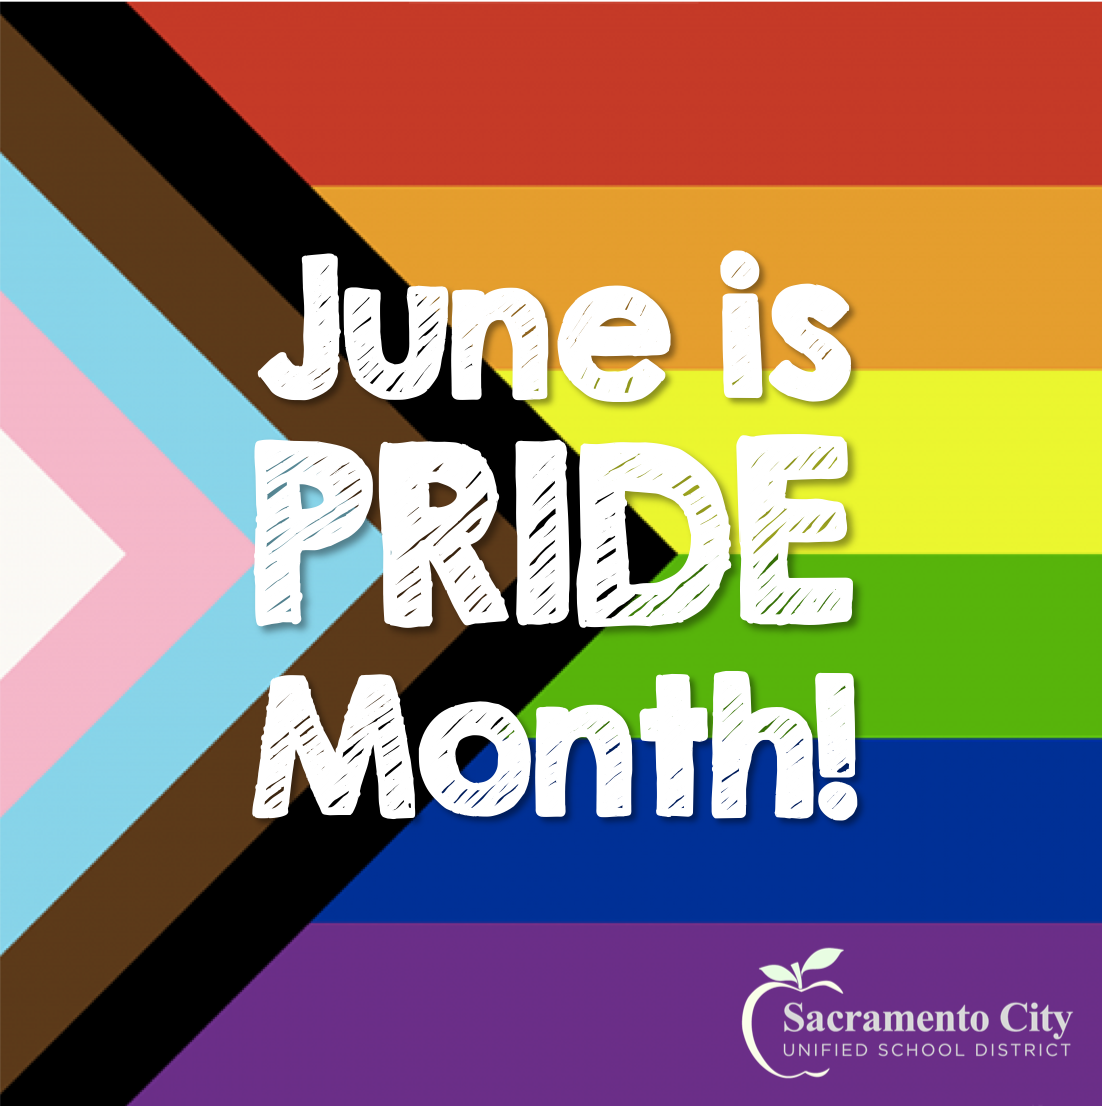 June is Pride Month! Sacramento City Unified School District